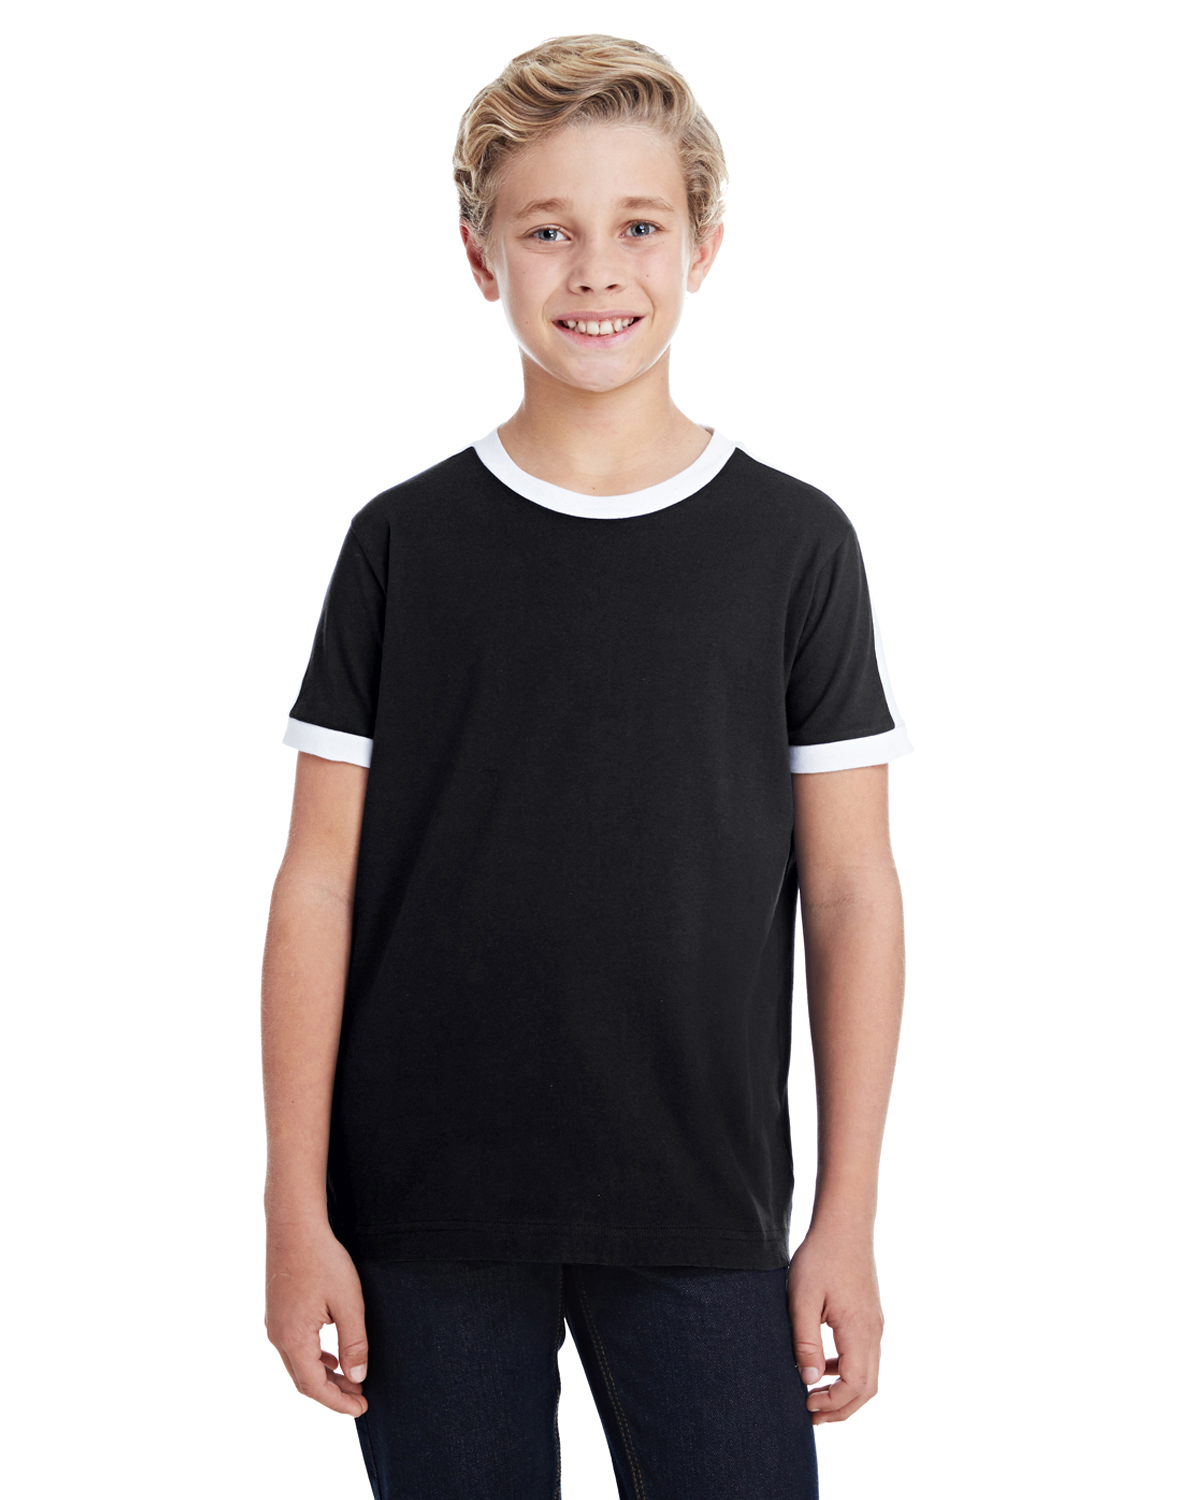 LAT 6132 Youth Soccer Ringer T-Shirt - Shirtmax